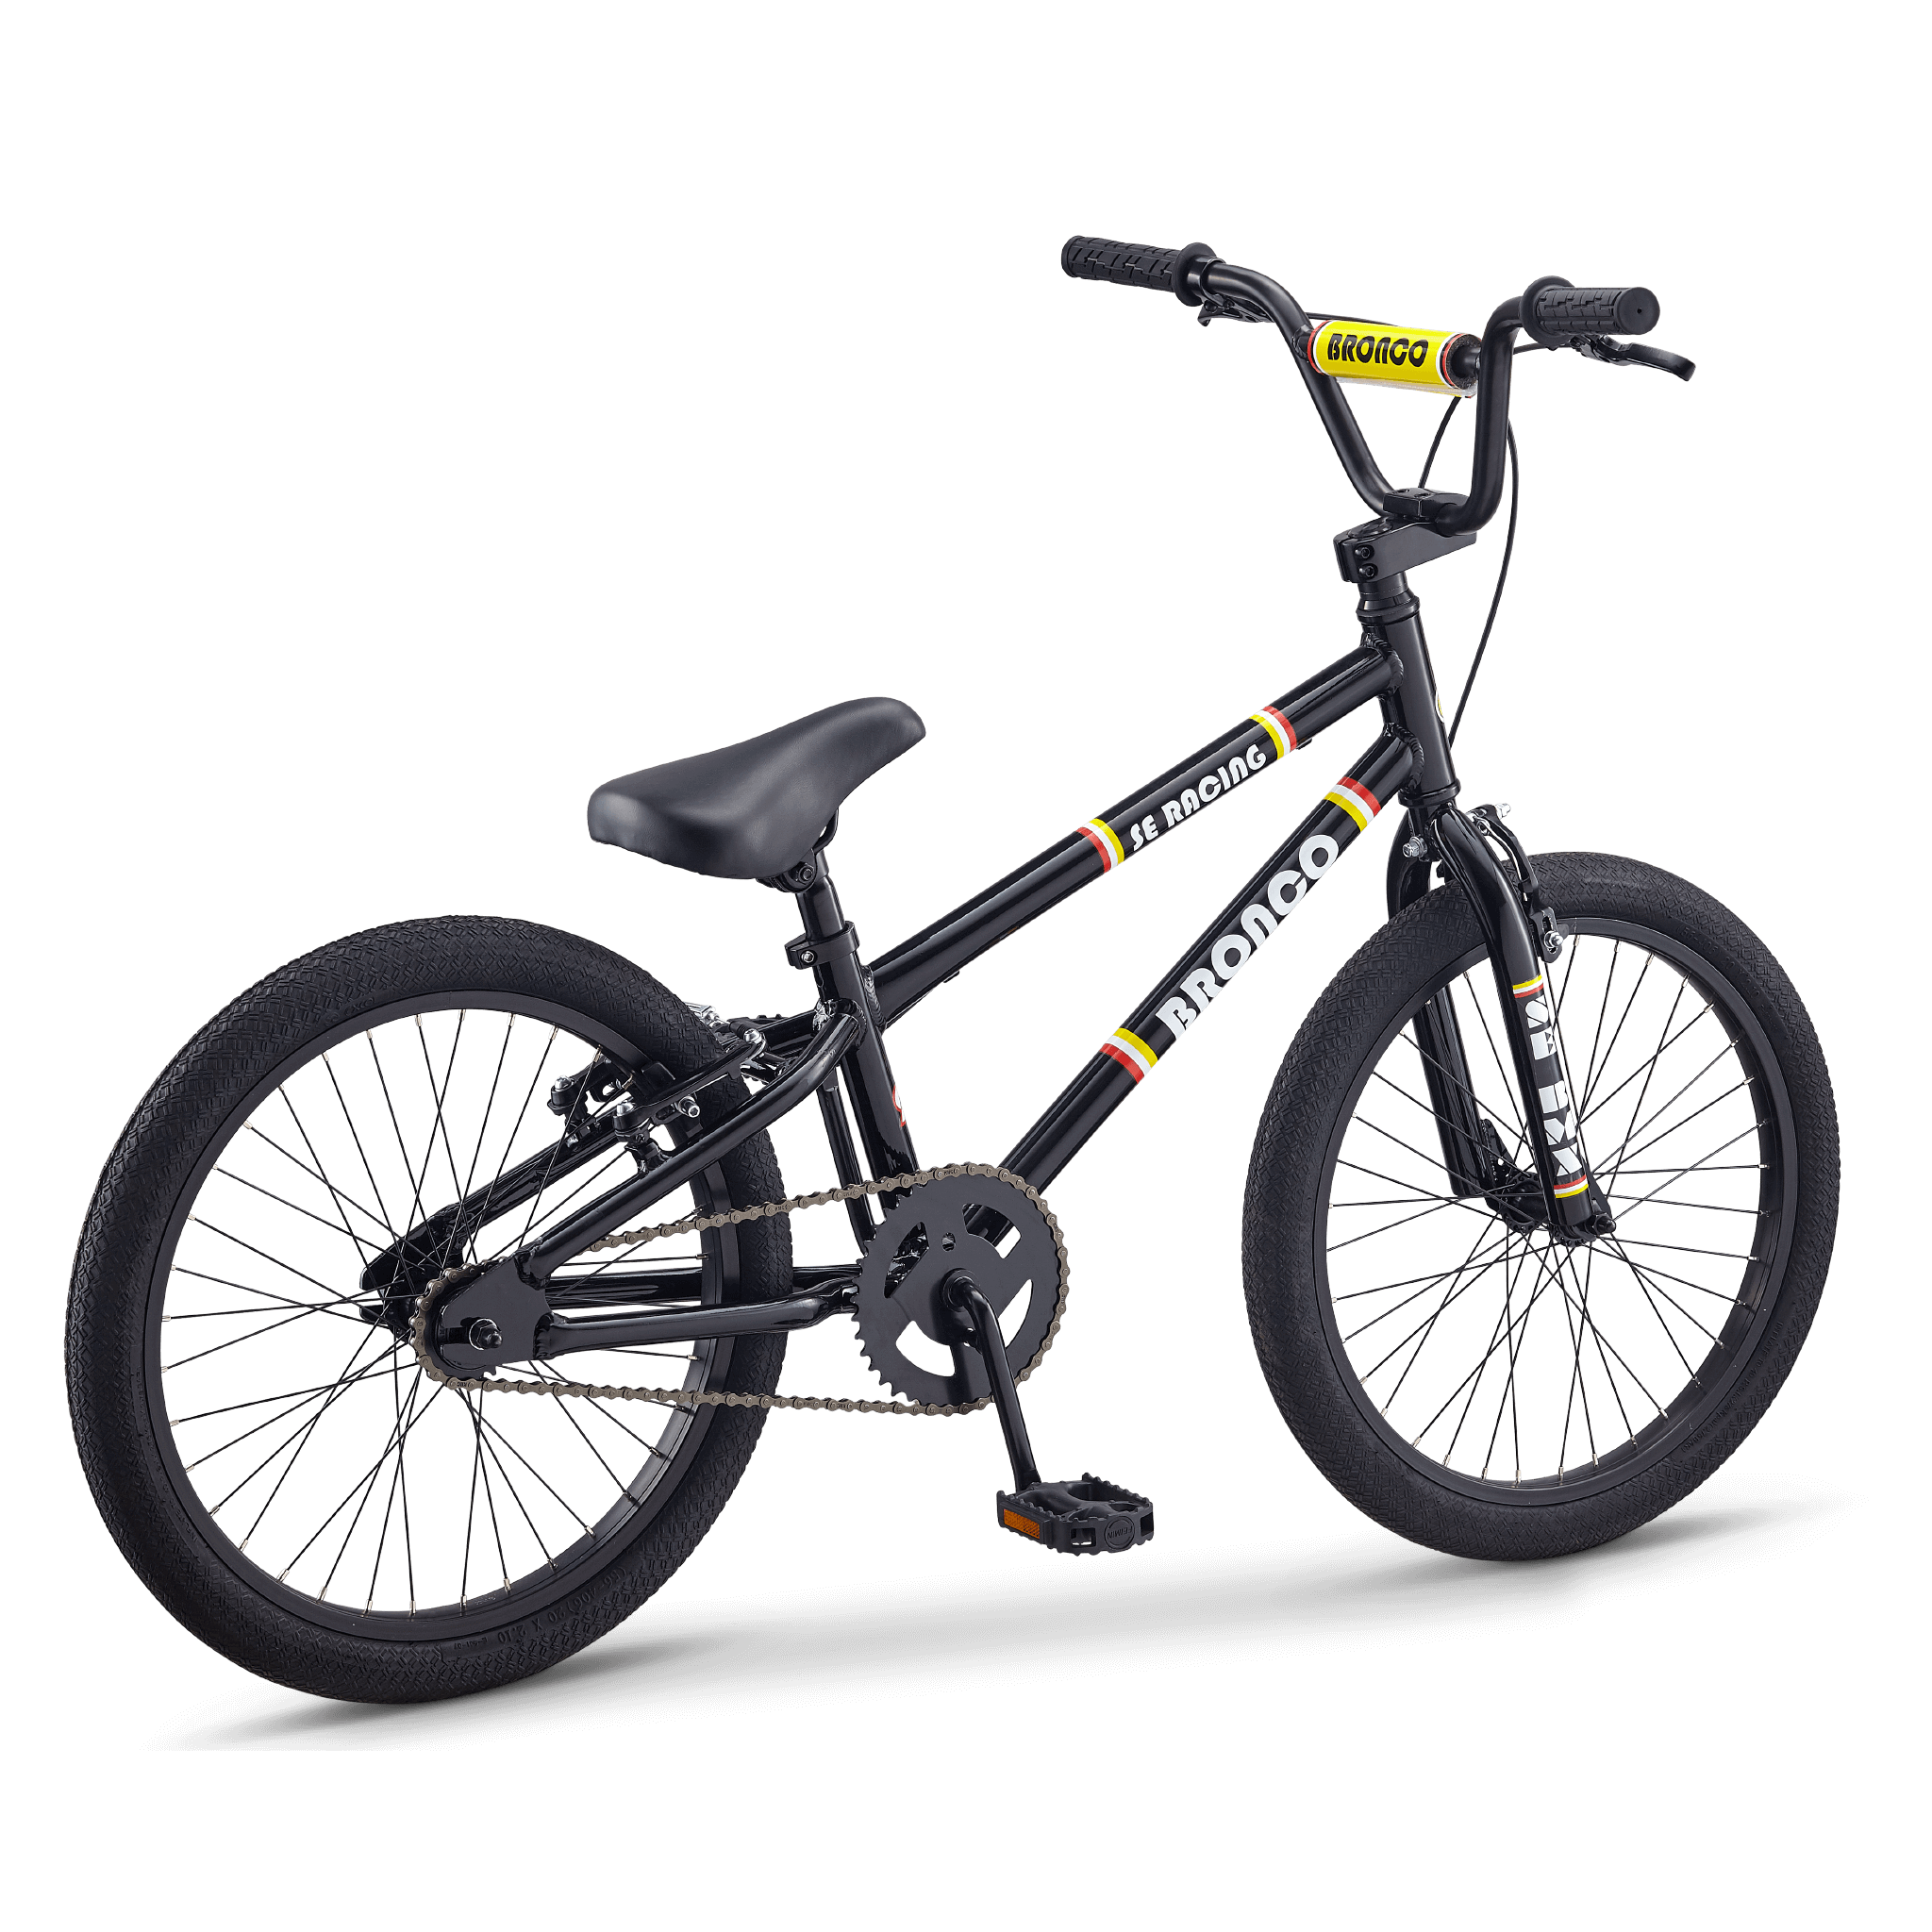 bronco bmx bike